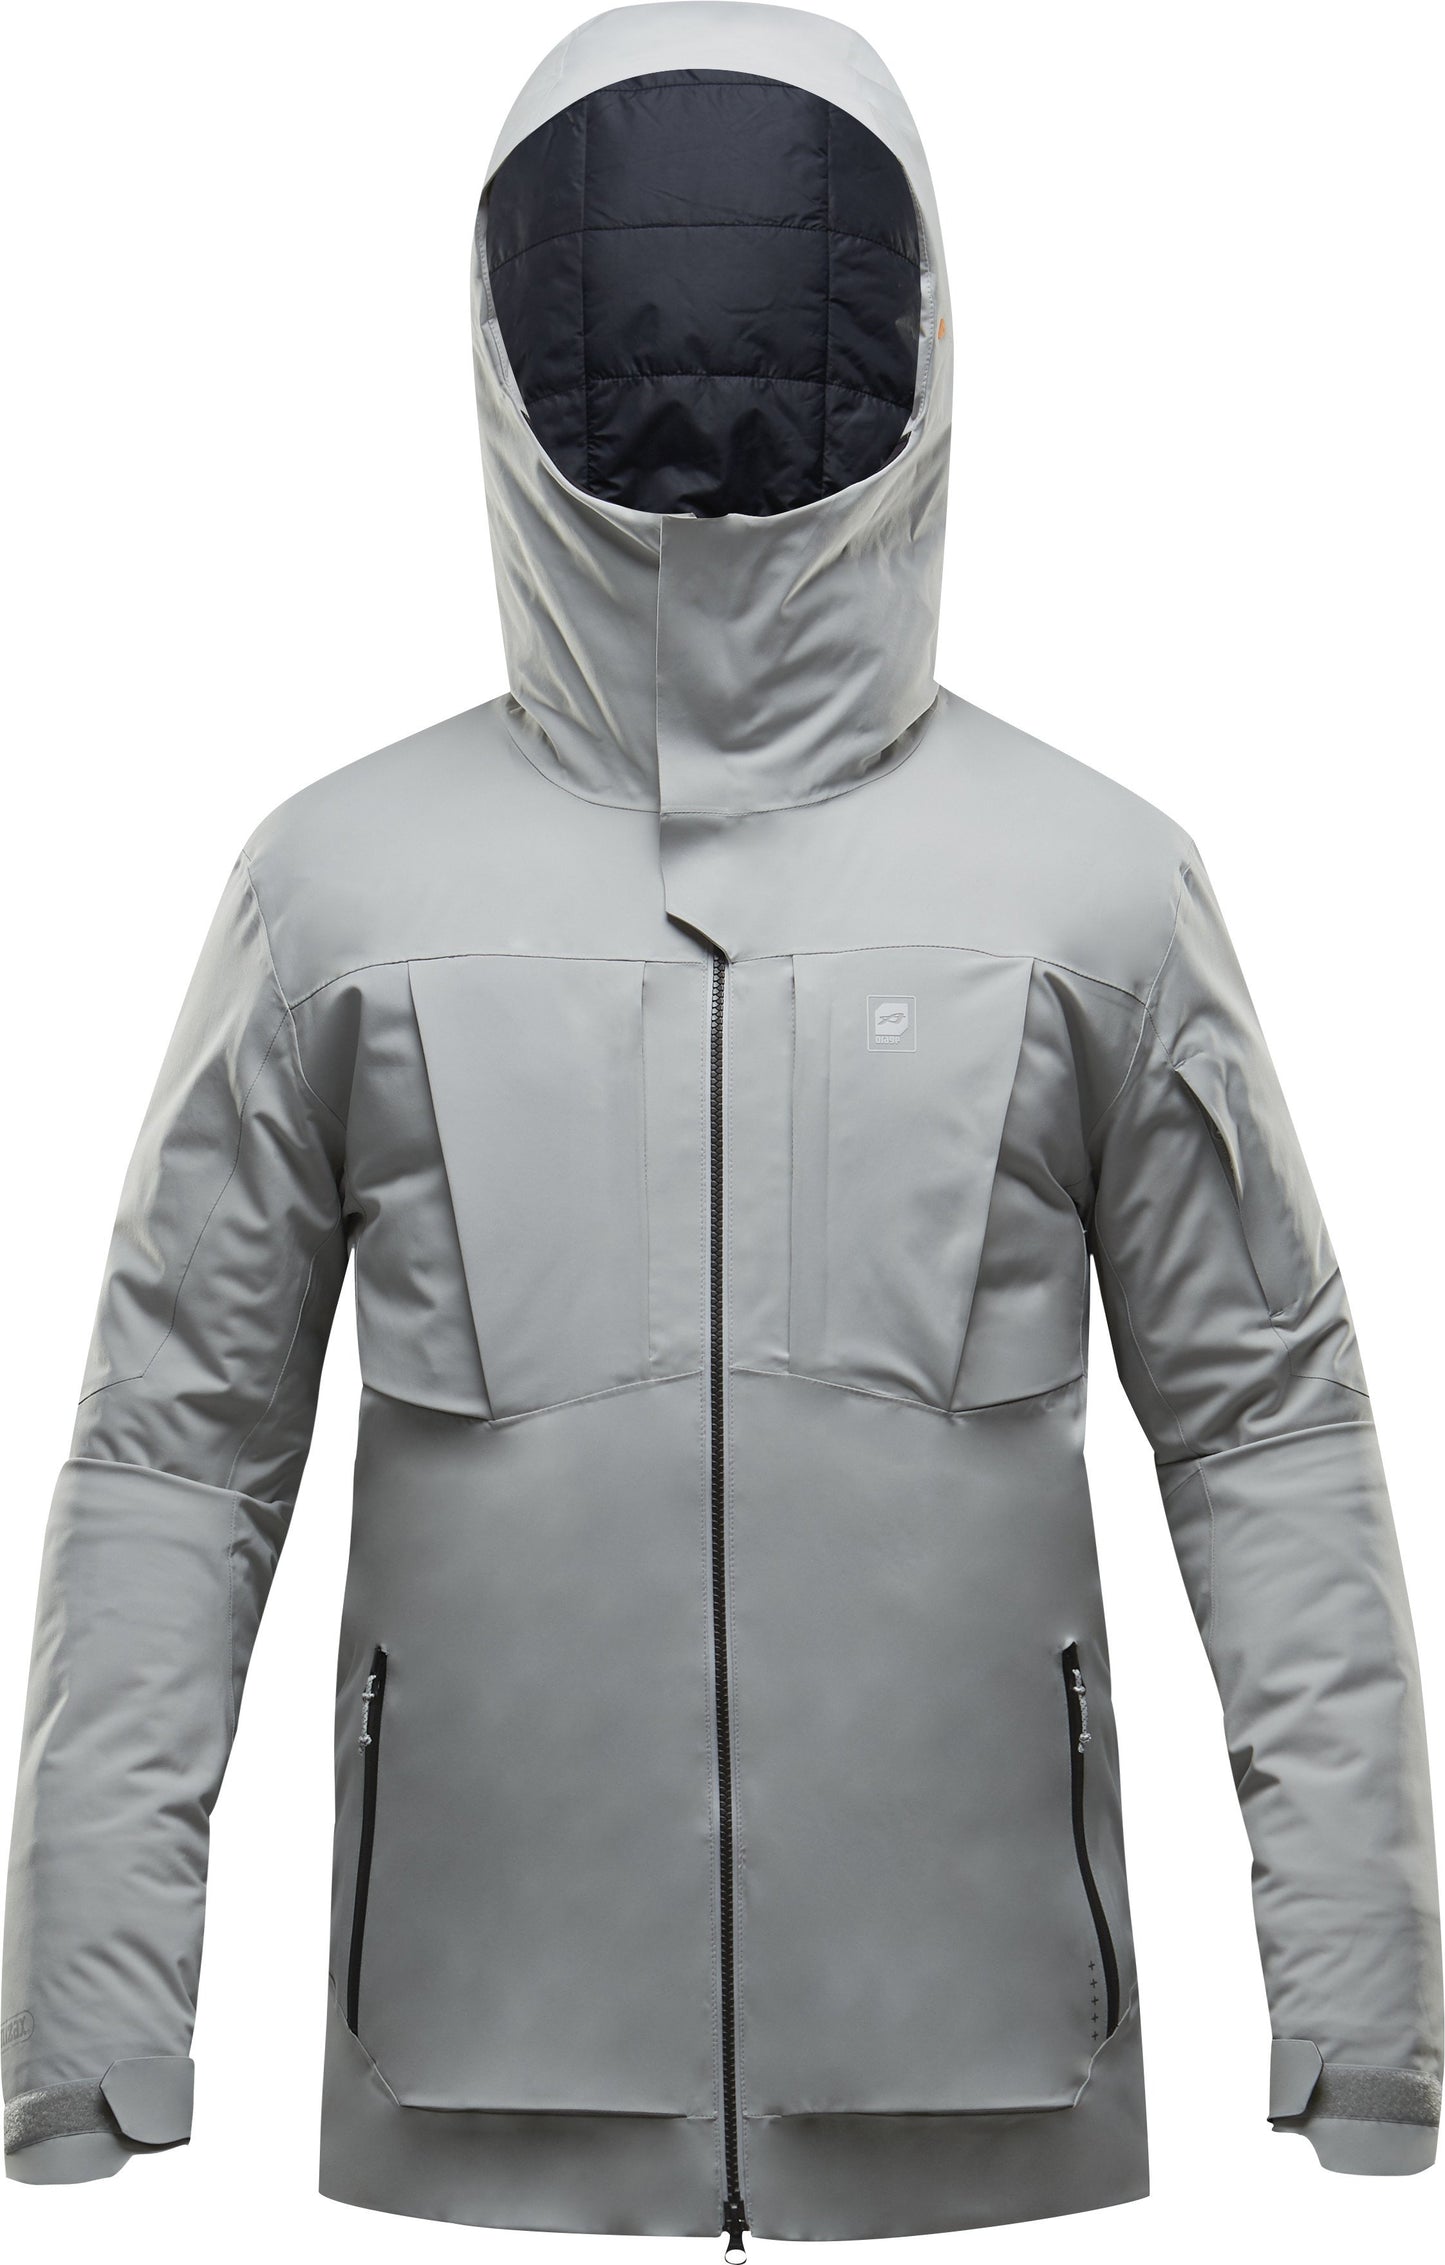 EyeBogler Full Sleeve Solid Men Jacket - Price History